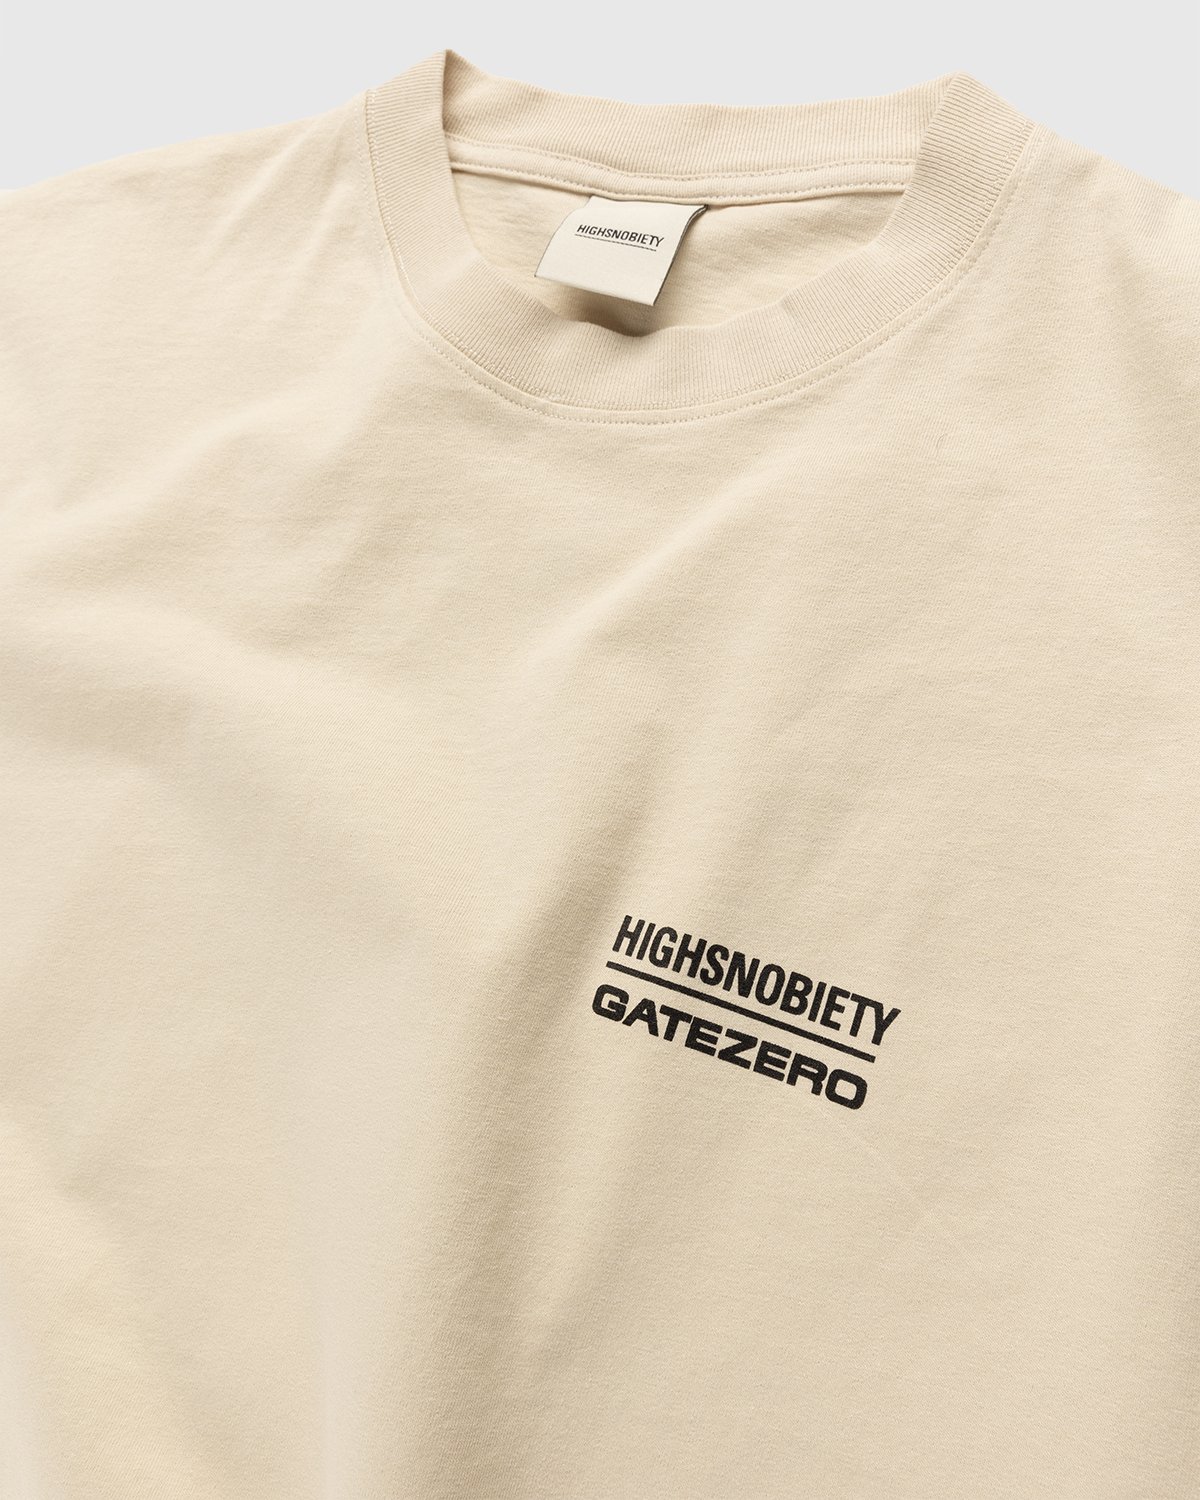 Highsnobiety - GATEZERO City Series 2 T-Shirt Eggshell - Clothing - White - Image 5